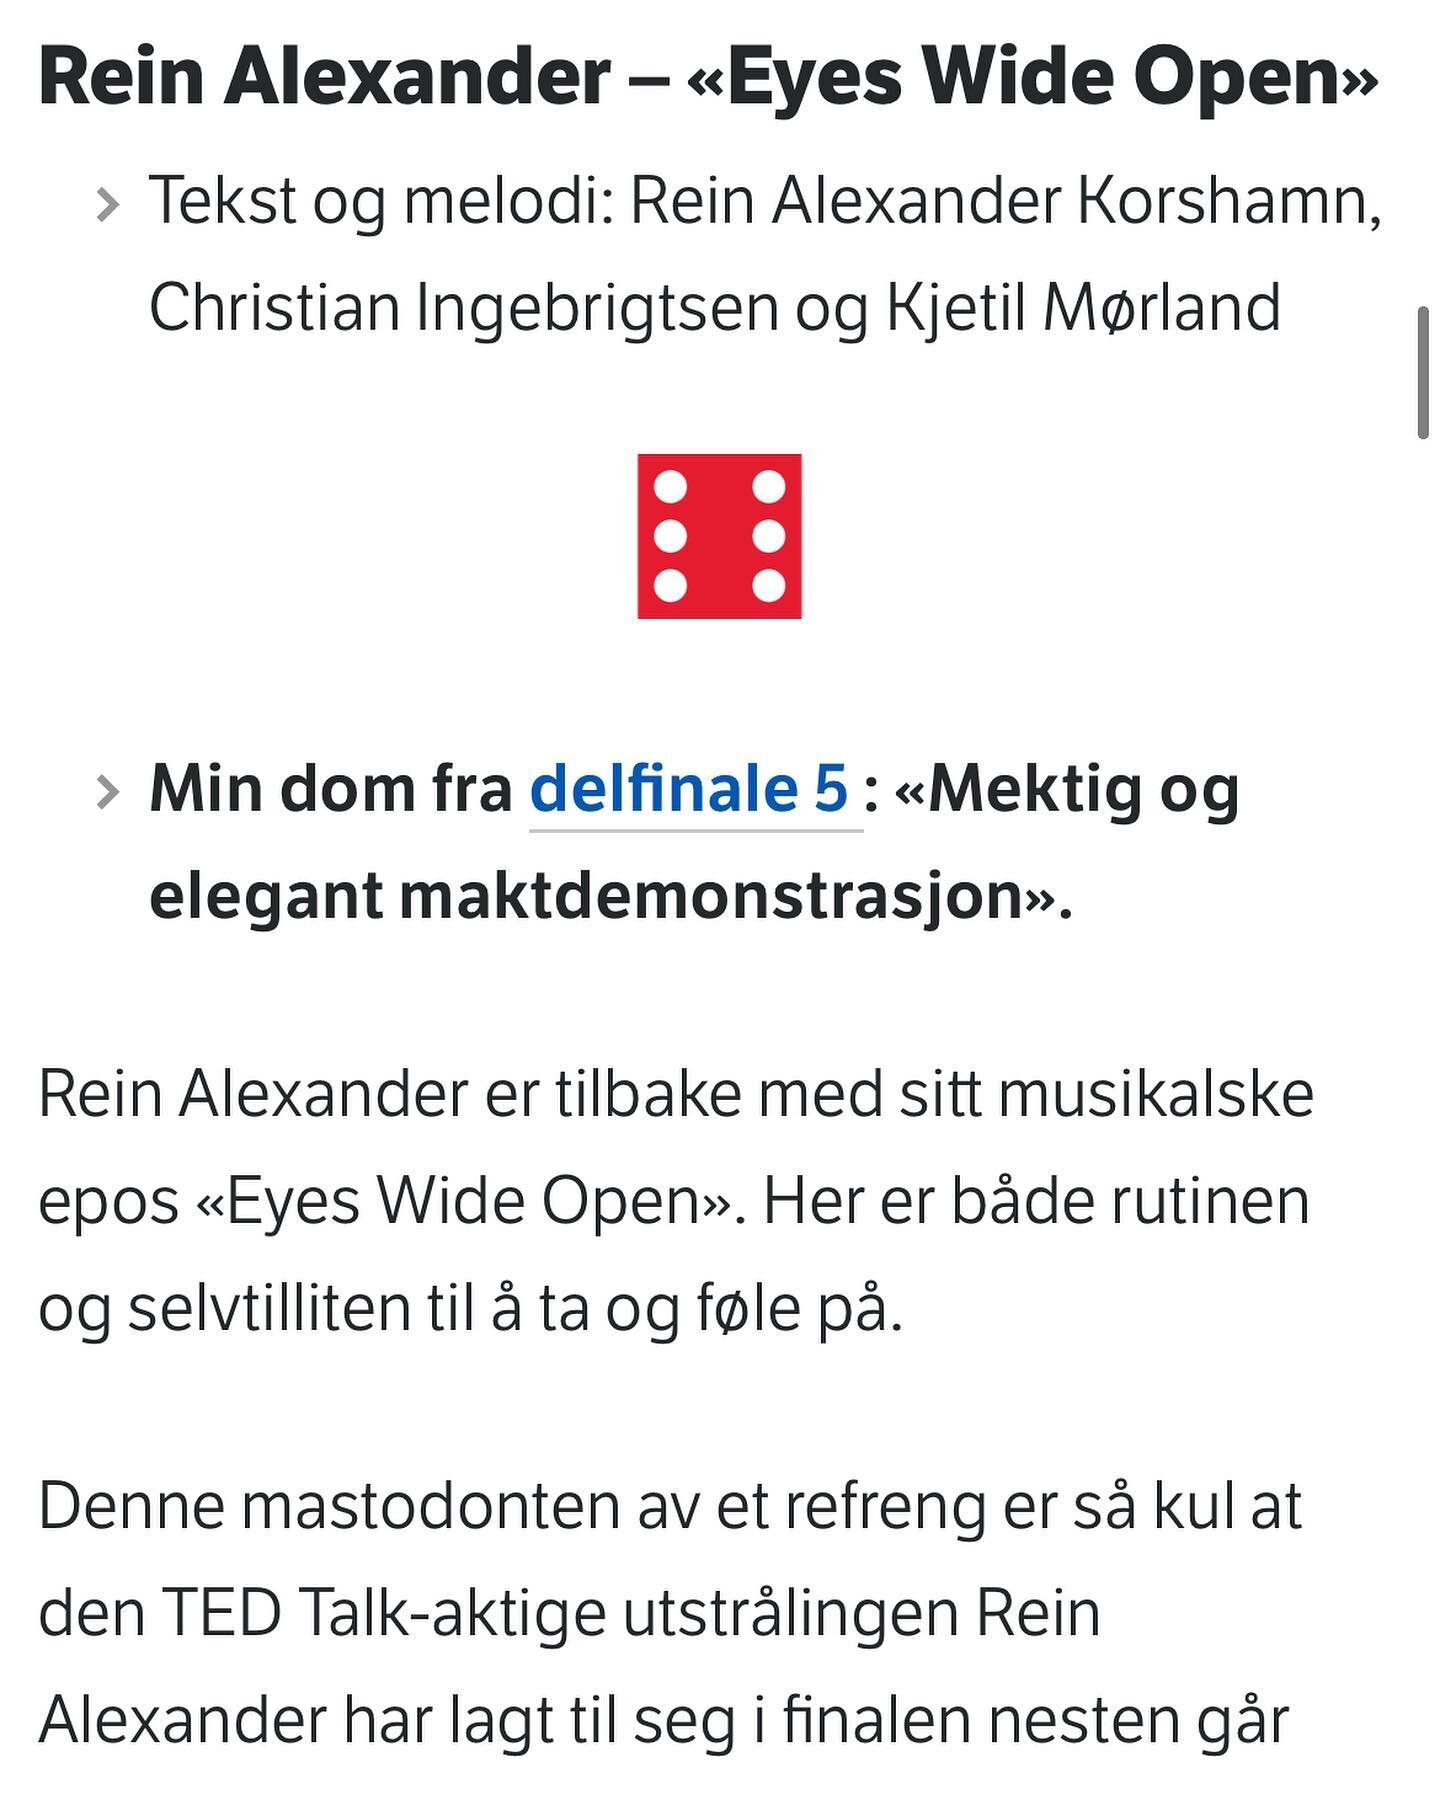 Speechless 🙏🏻 @nrk @dagbladet 

#reinalexander #eyeswideopen #mgp #nrkmgp